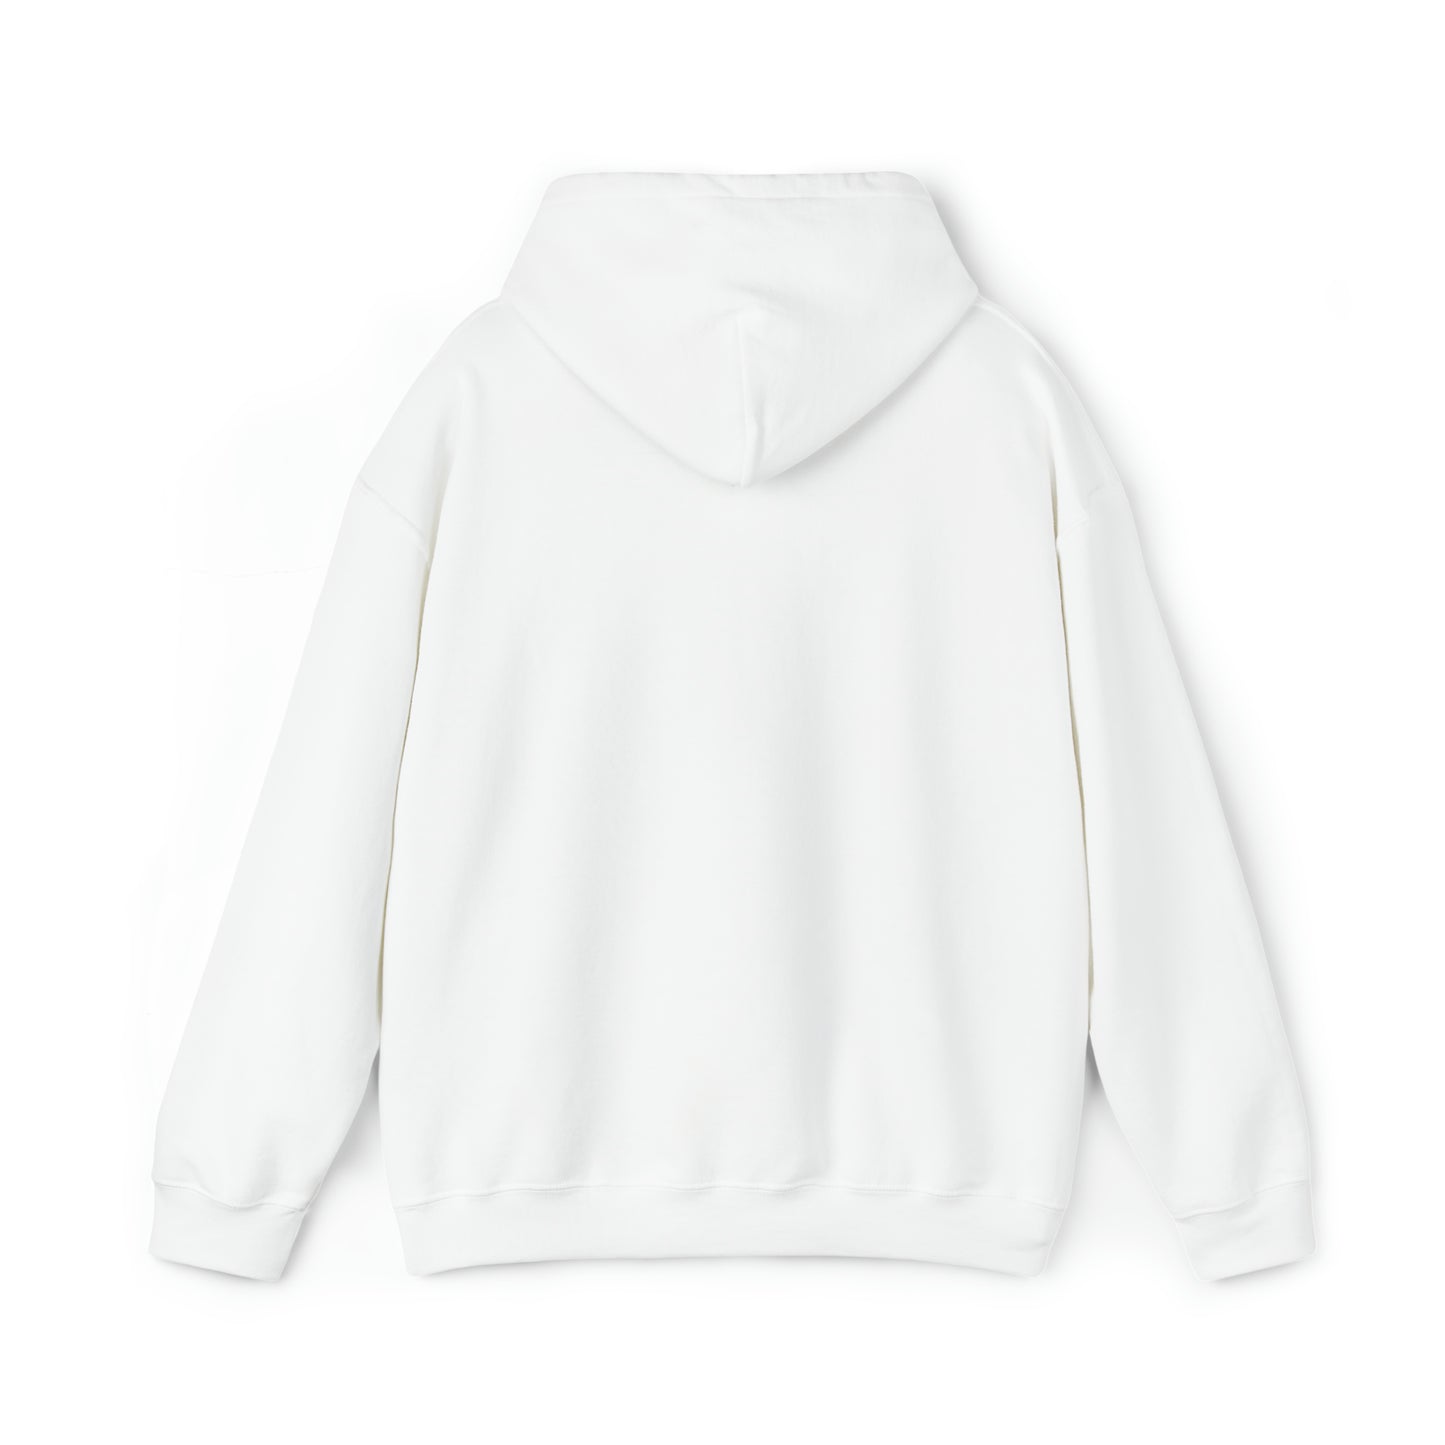 Happy Thanksgiving Unisex Heavy Blend™ Hooded Sweatshirt image